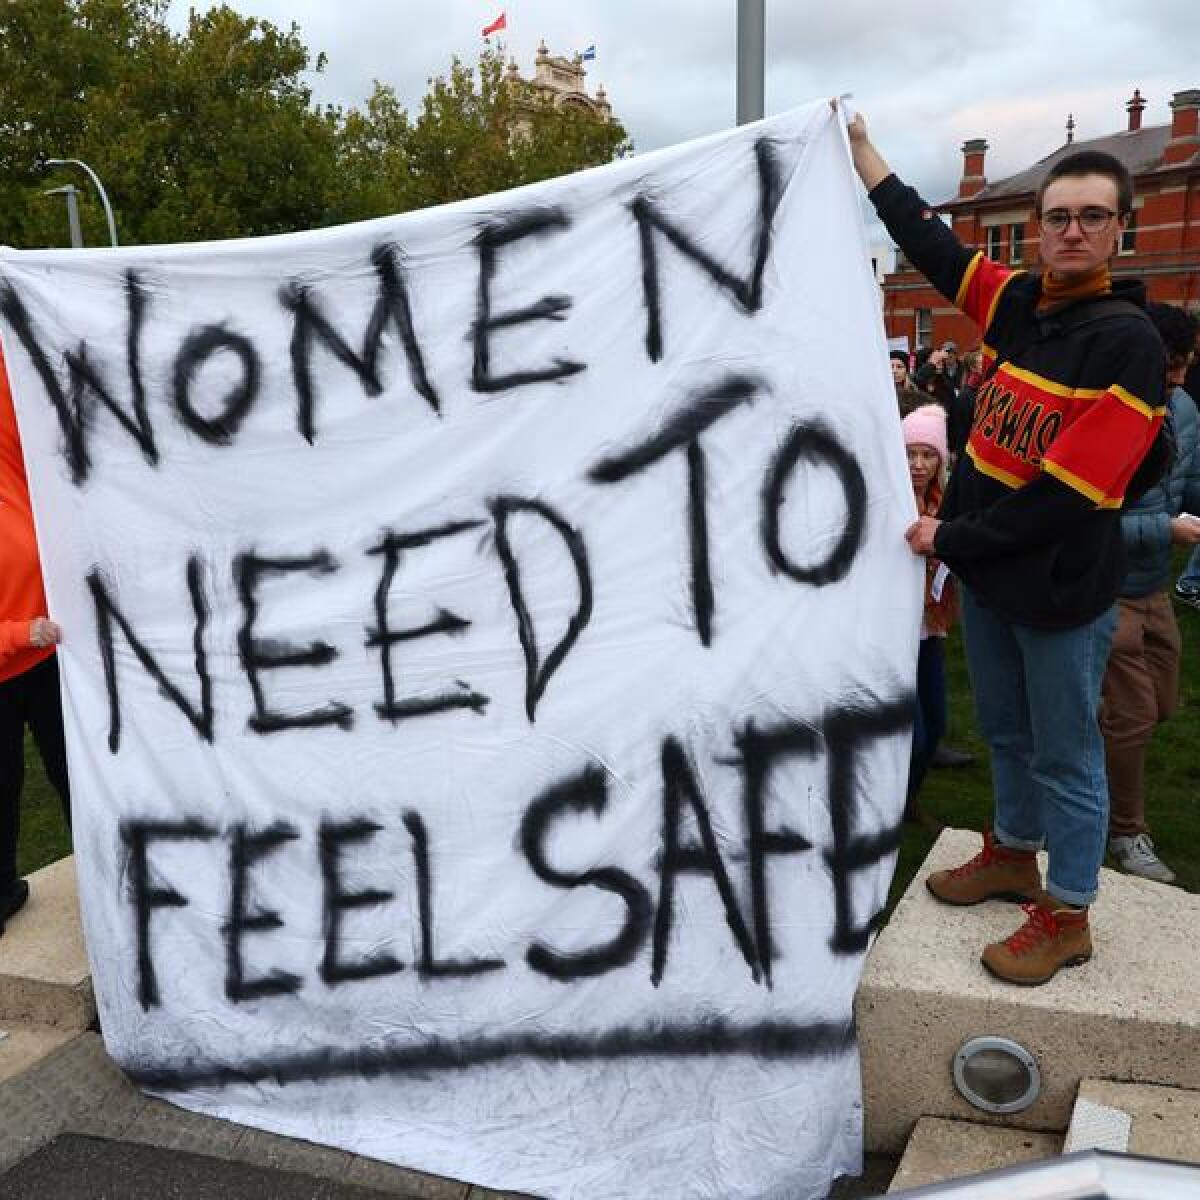 A rally against men's violence in Ballarat.